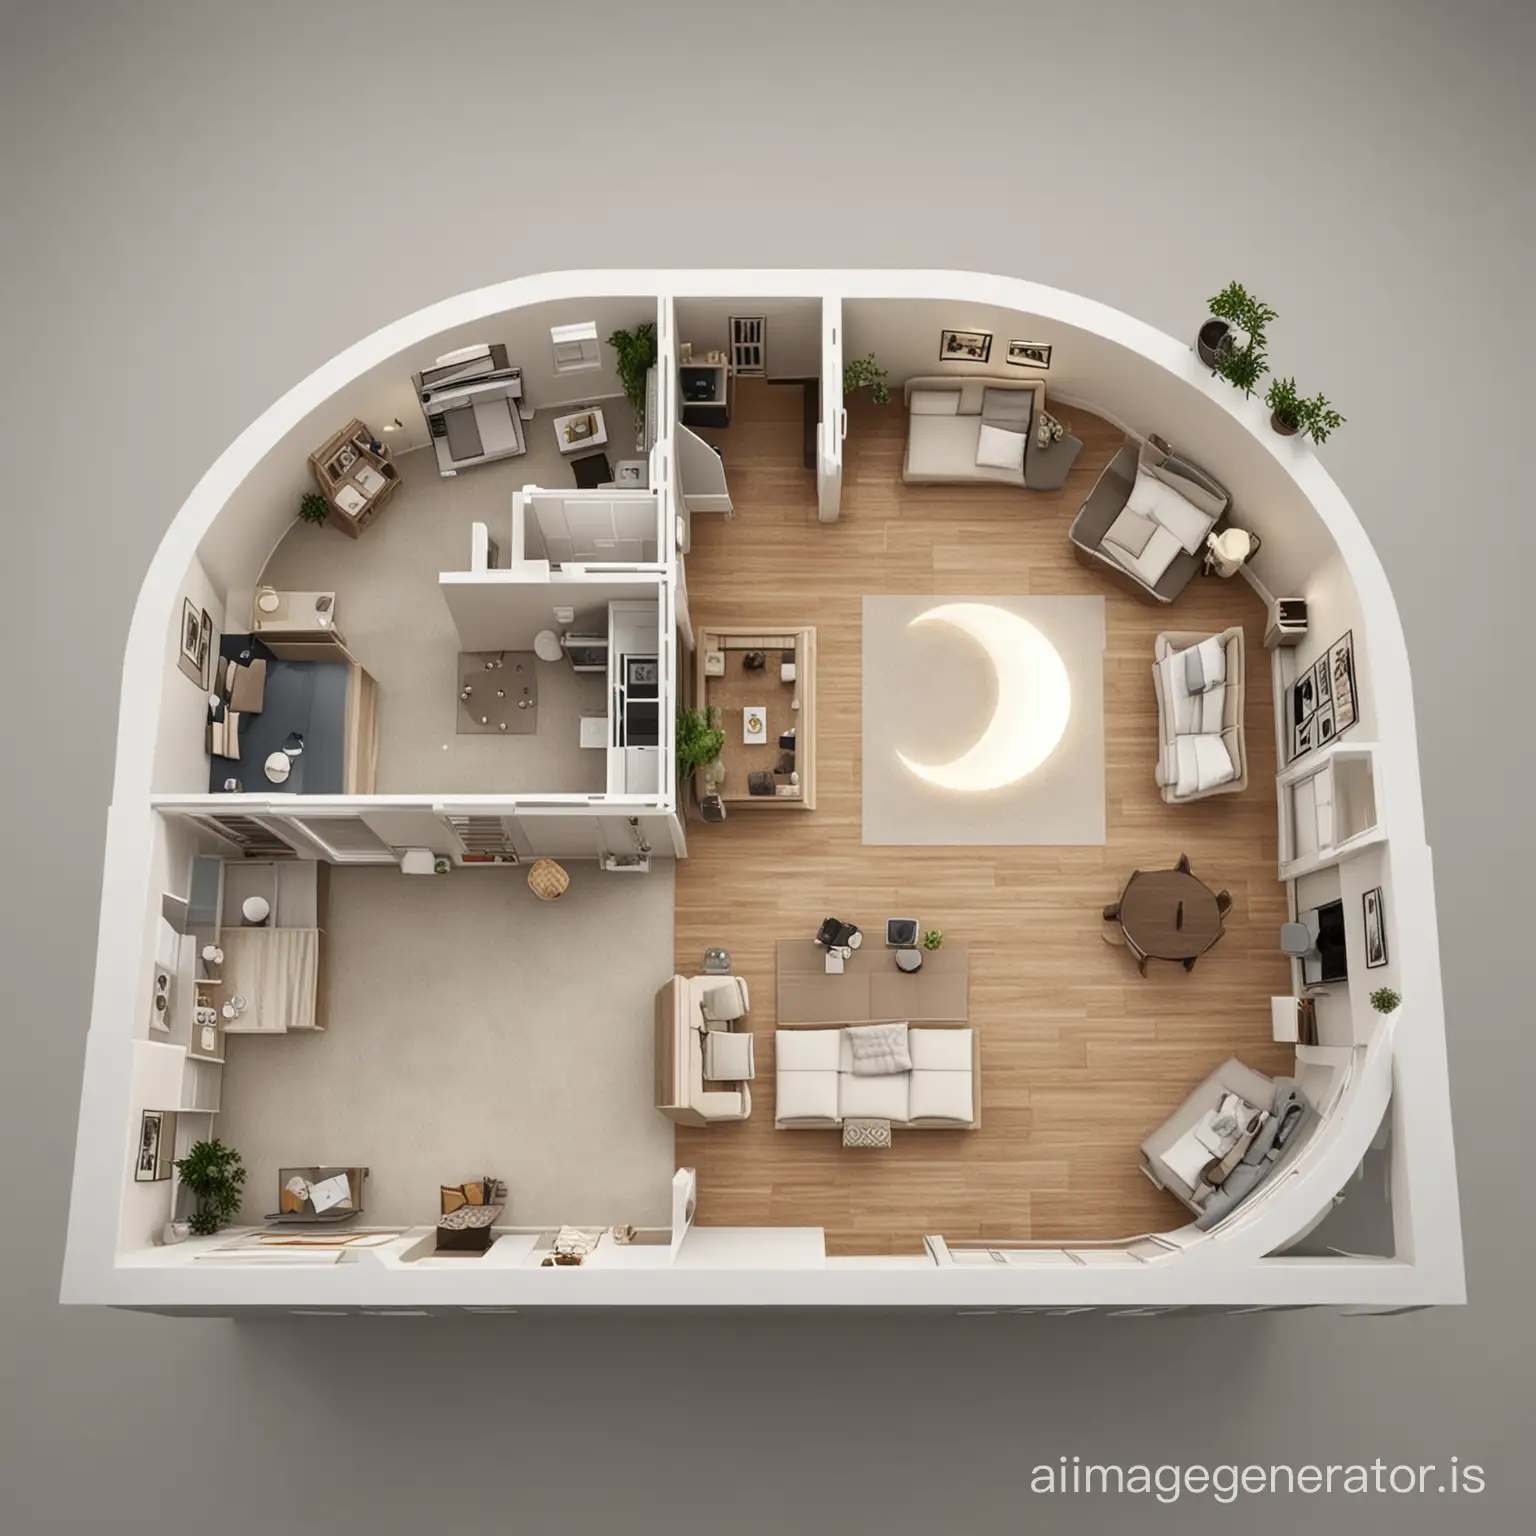 Moon-Crescent-Shaped-Apartment-Floor-Plan-Design